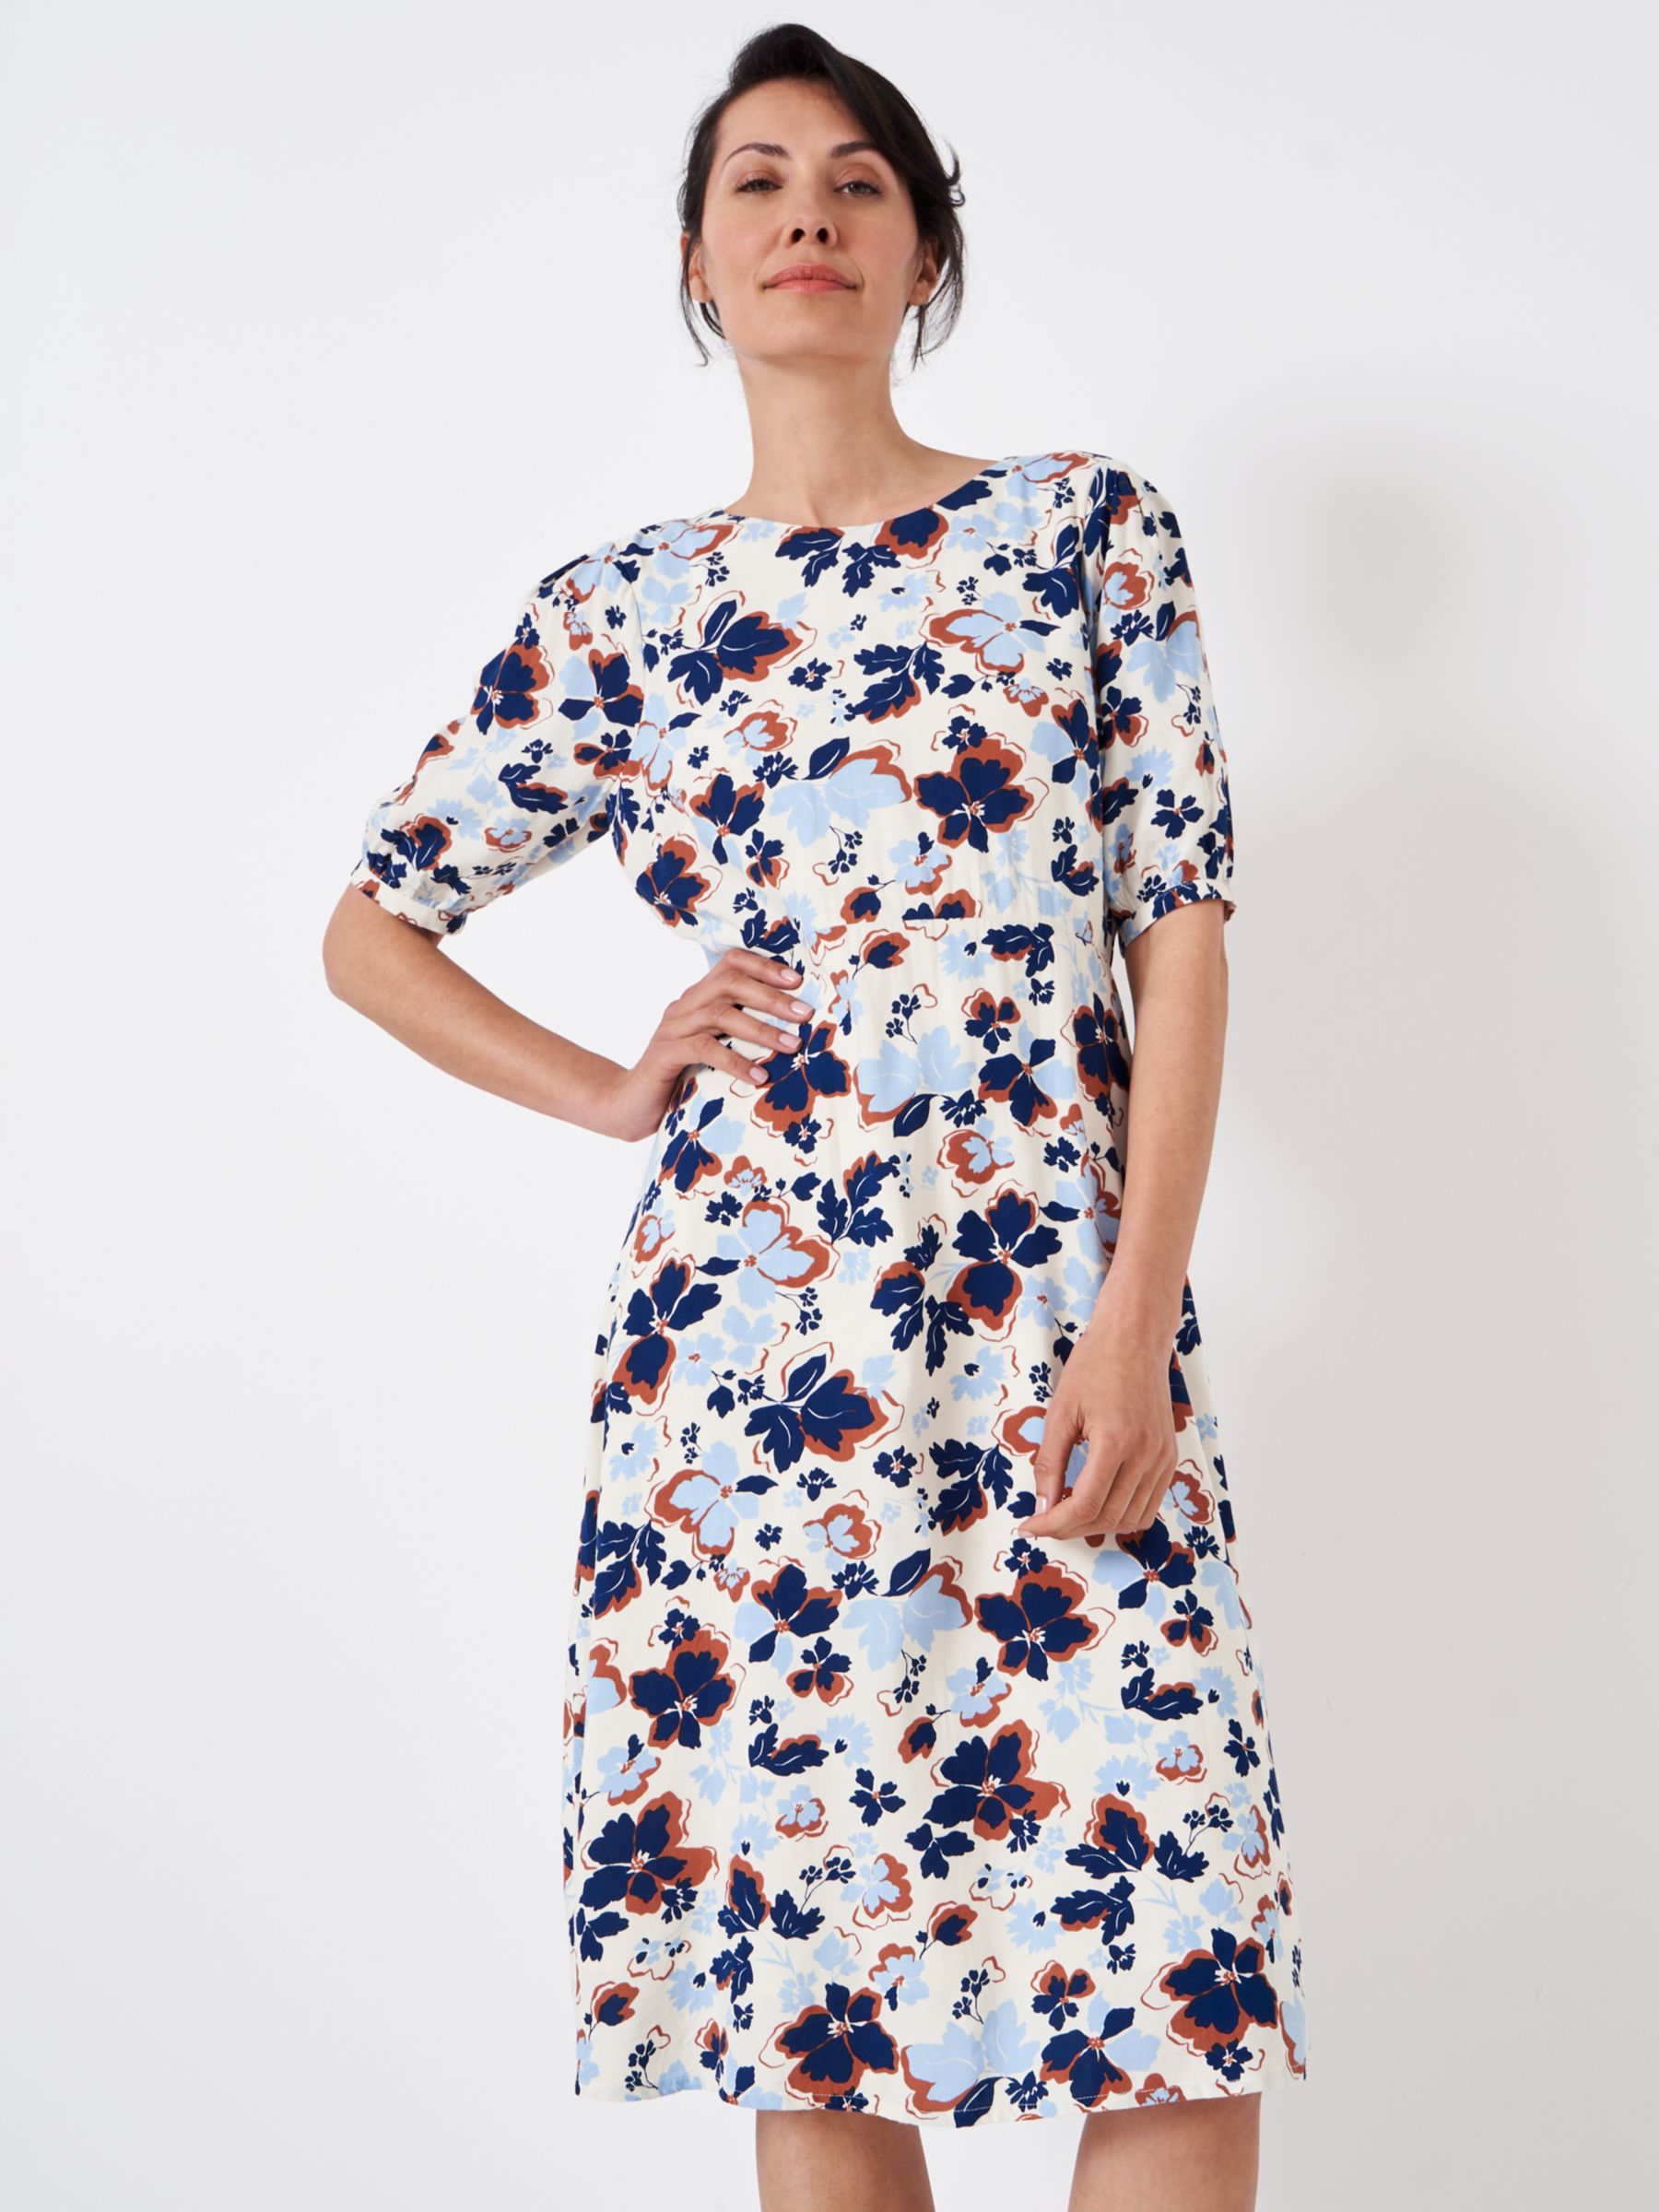 Crew Clothing Tori Floral Print Dress, Beige/Multi, 6